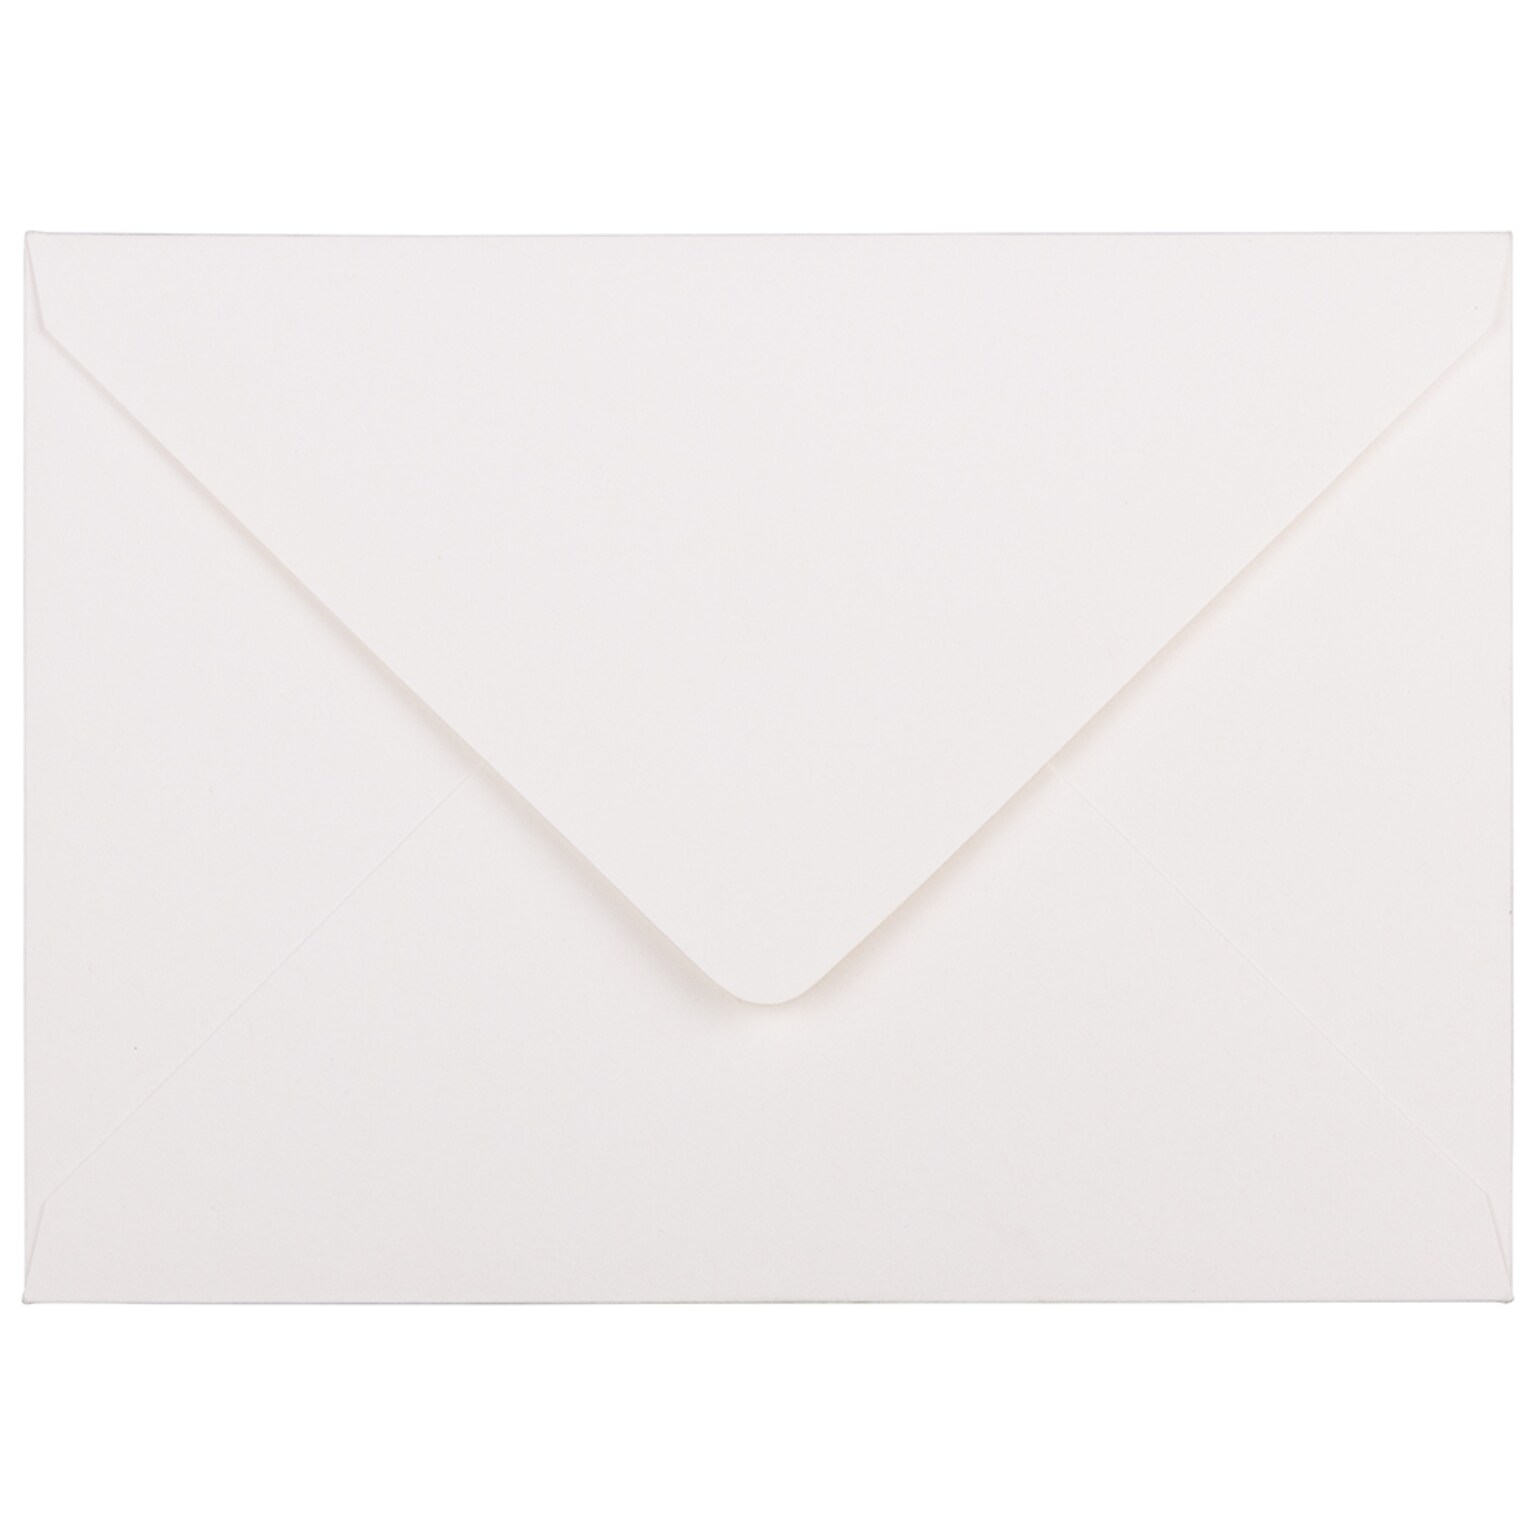 JAM Paper A7 Strathmore Invitation Envelopes with Euro Flap, 5.25 x 7.25, Bright White Laid, Bulk 250/Box (1921397H)